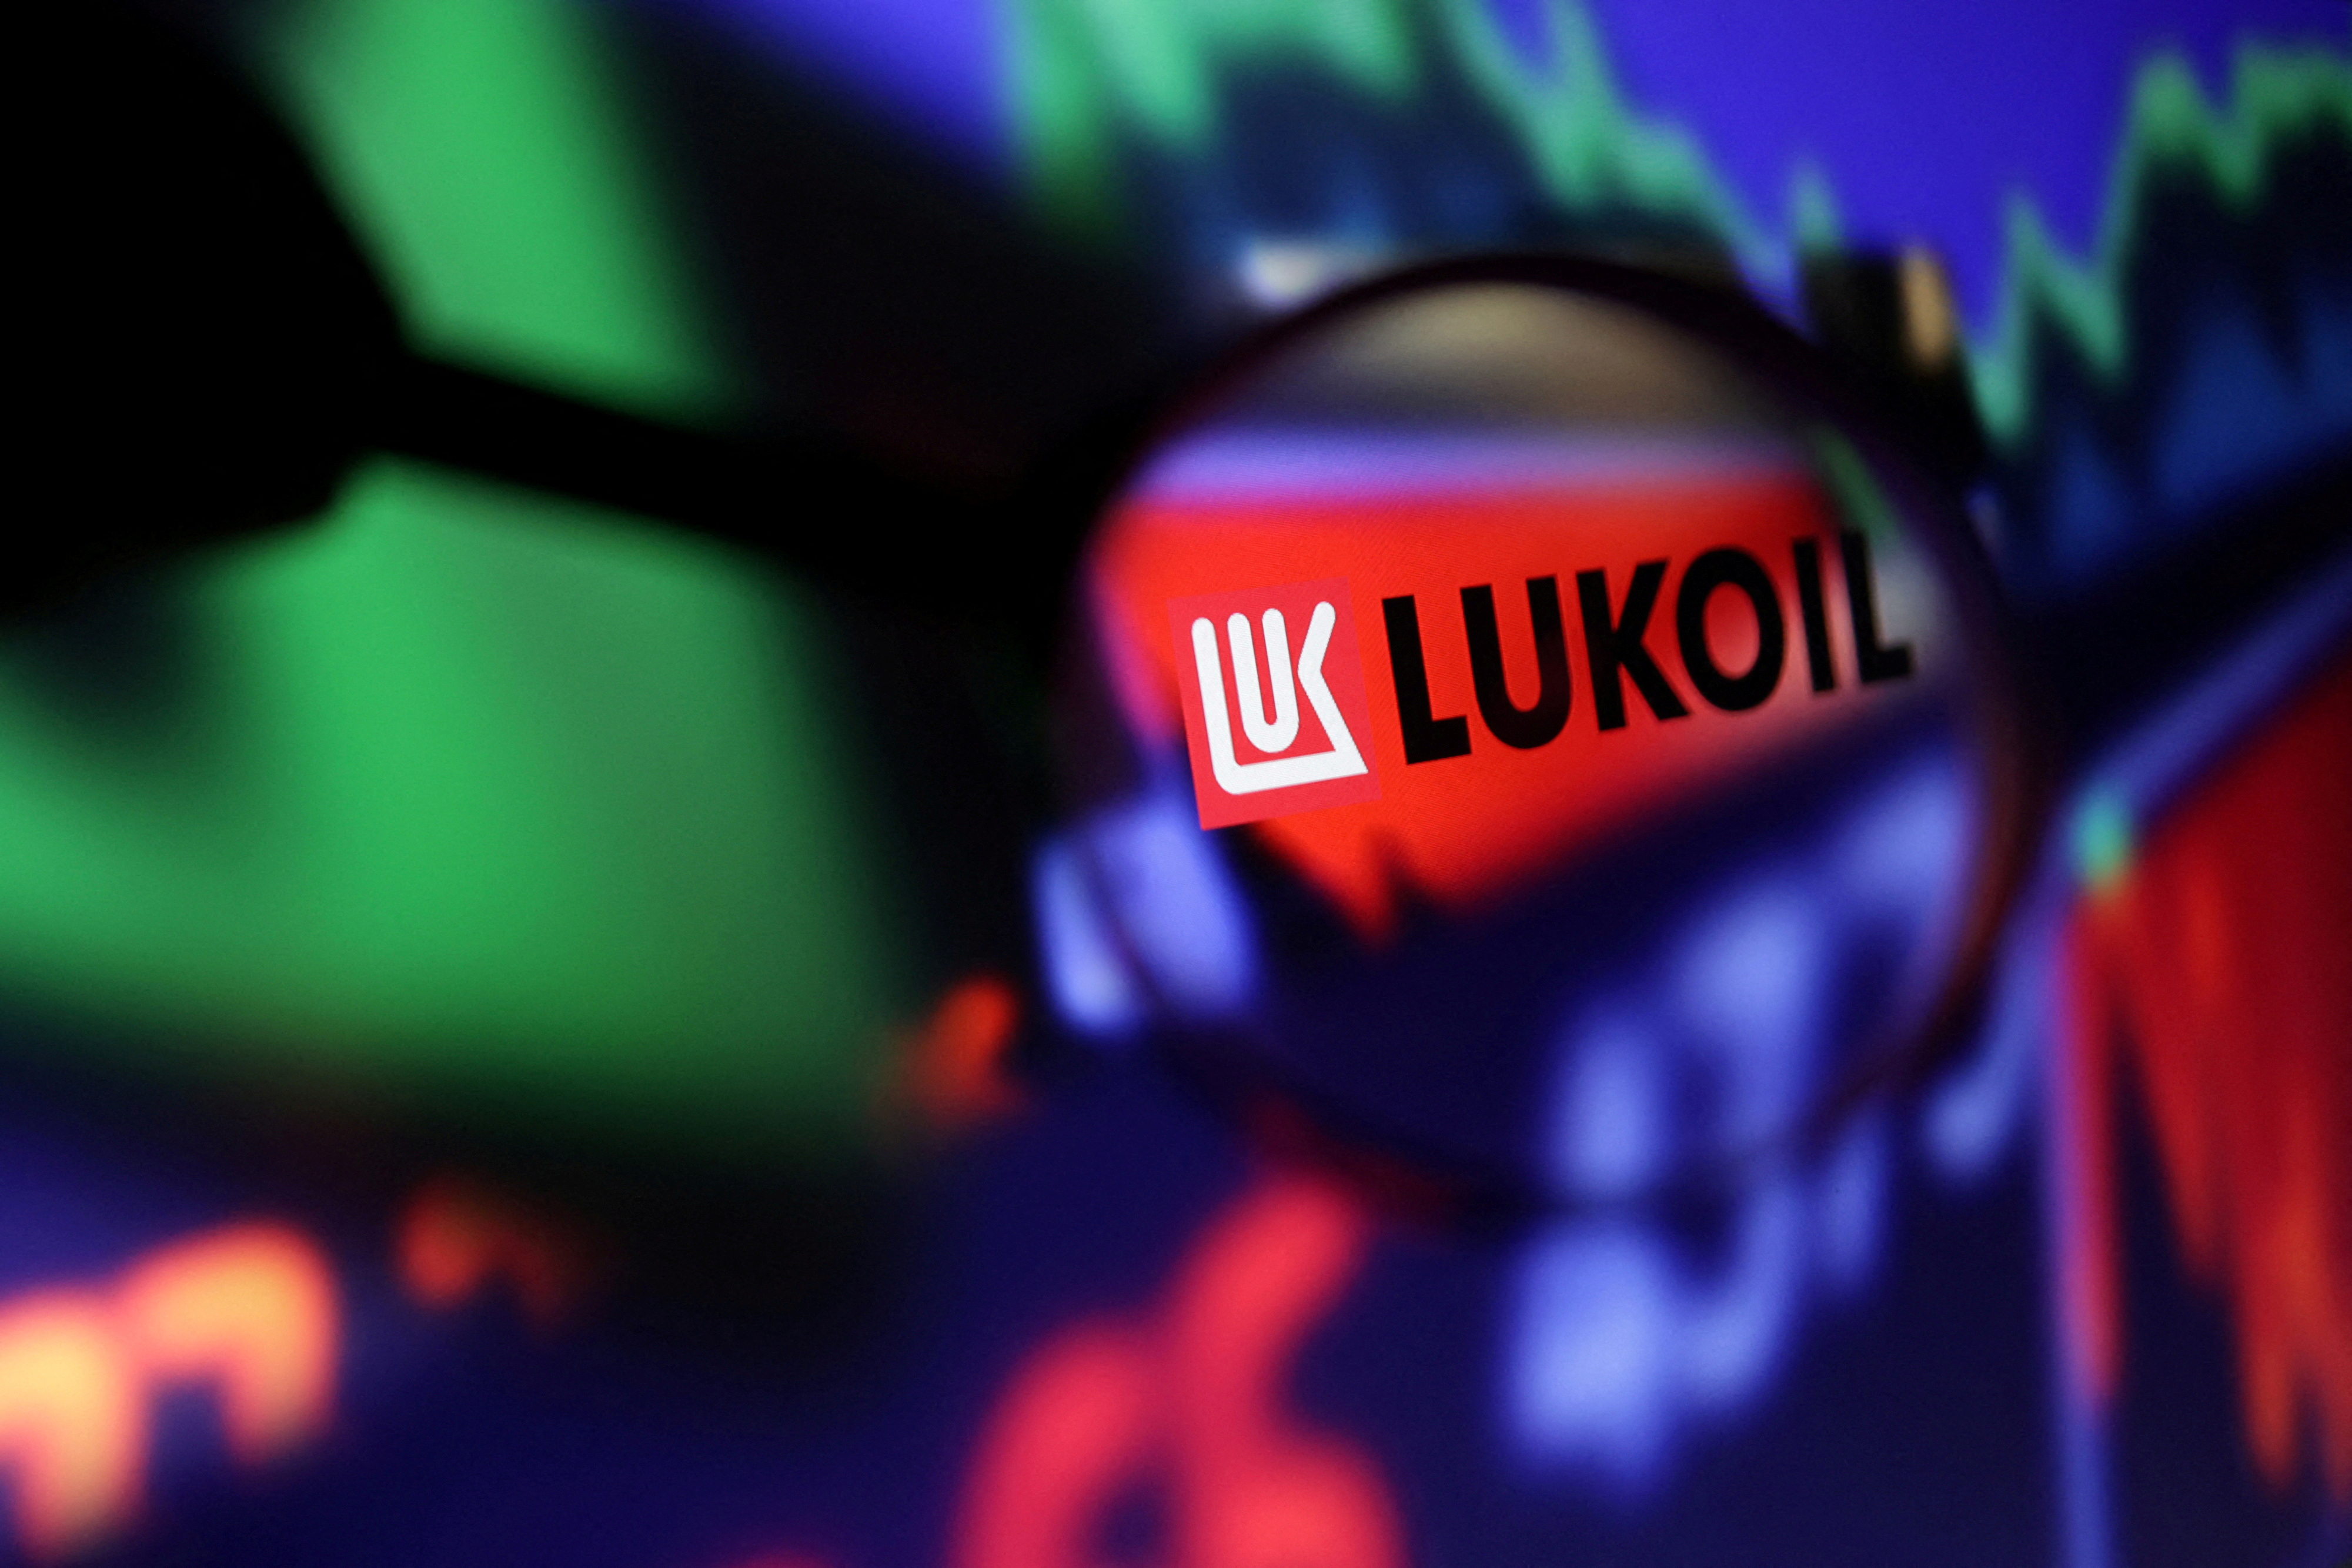 Illustration shows Lukoil logo